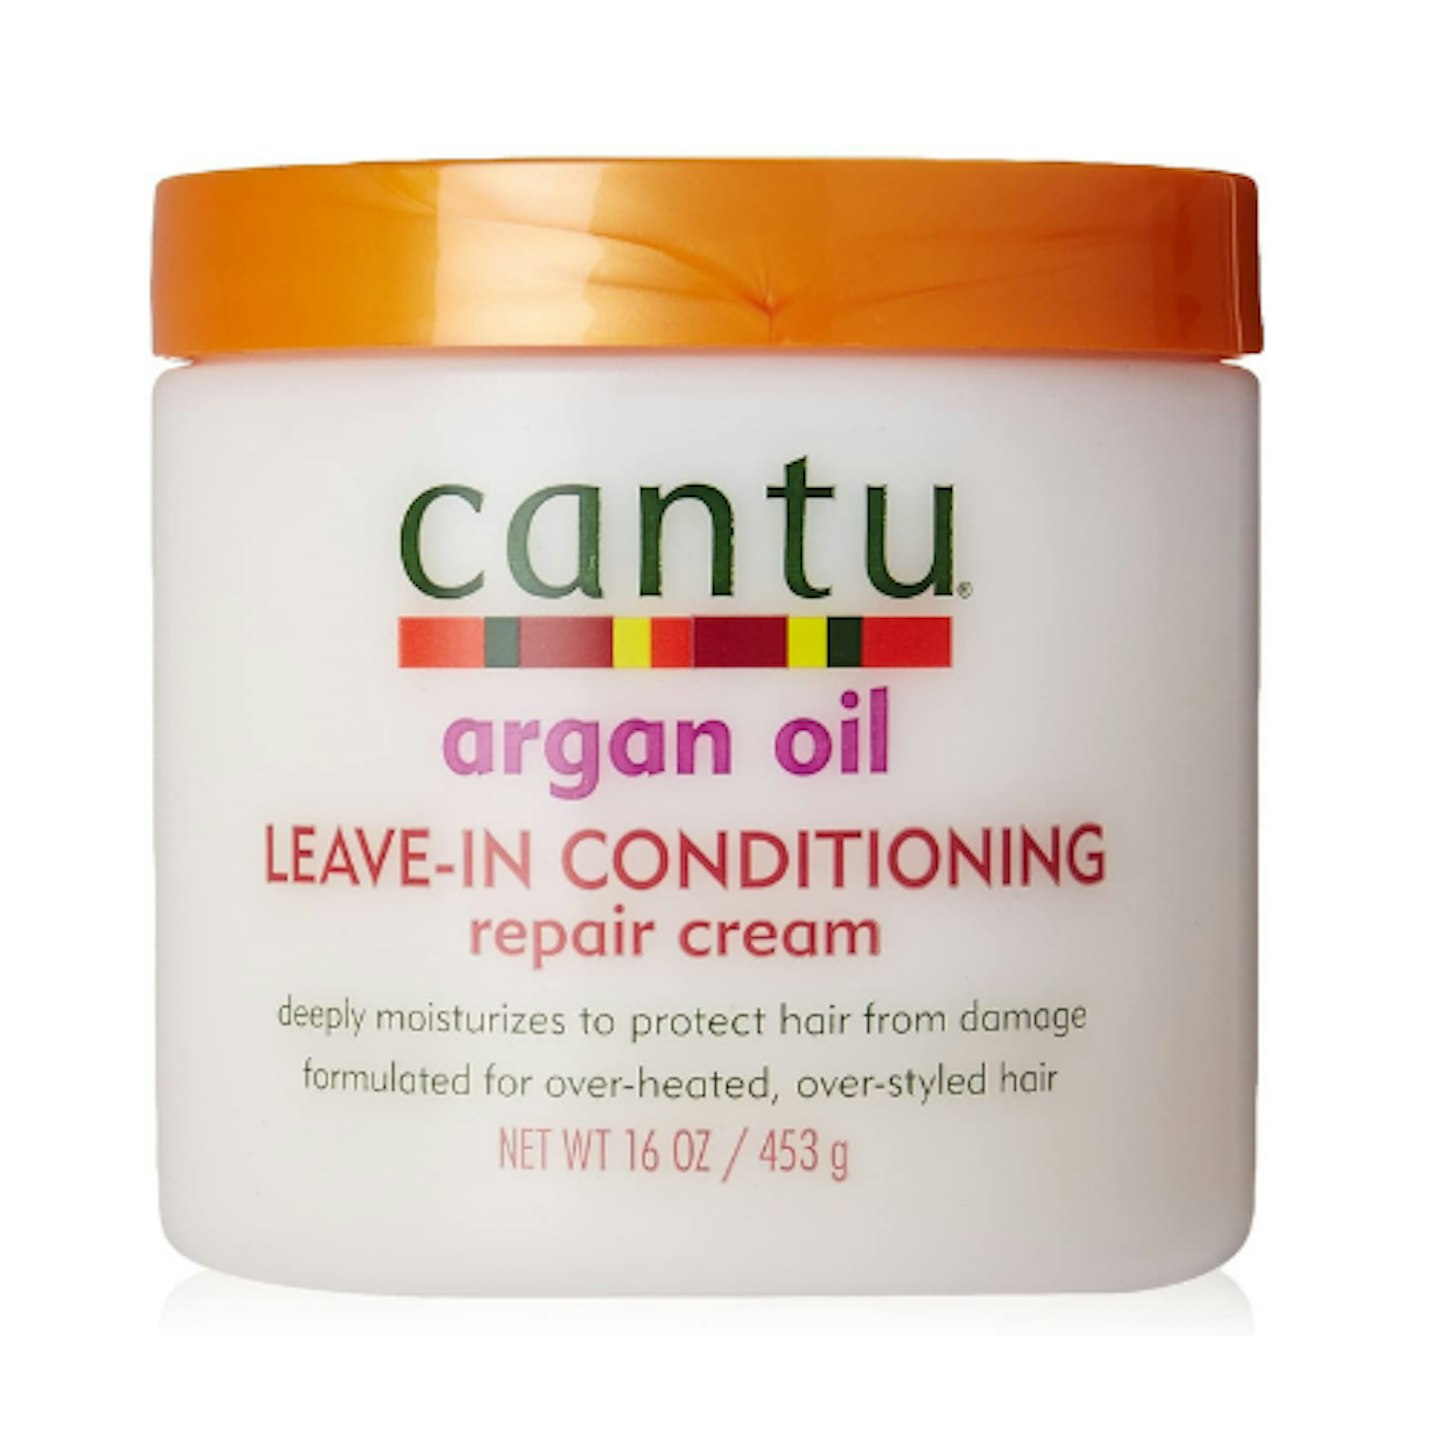 Cantu Argan Oil Leave-In Conditioning Repair Cream on white background